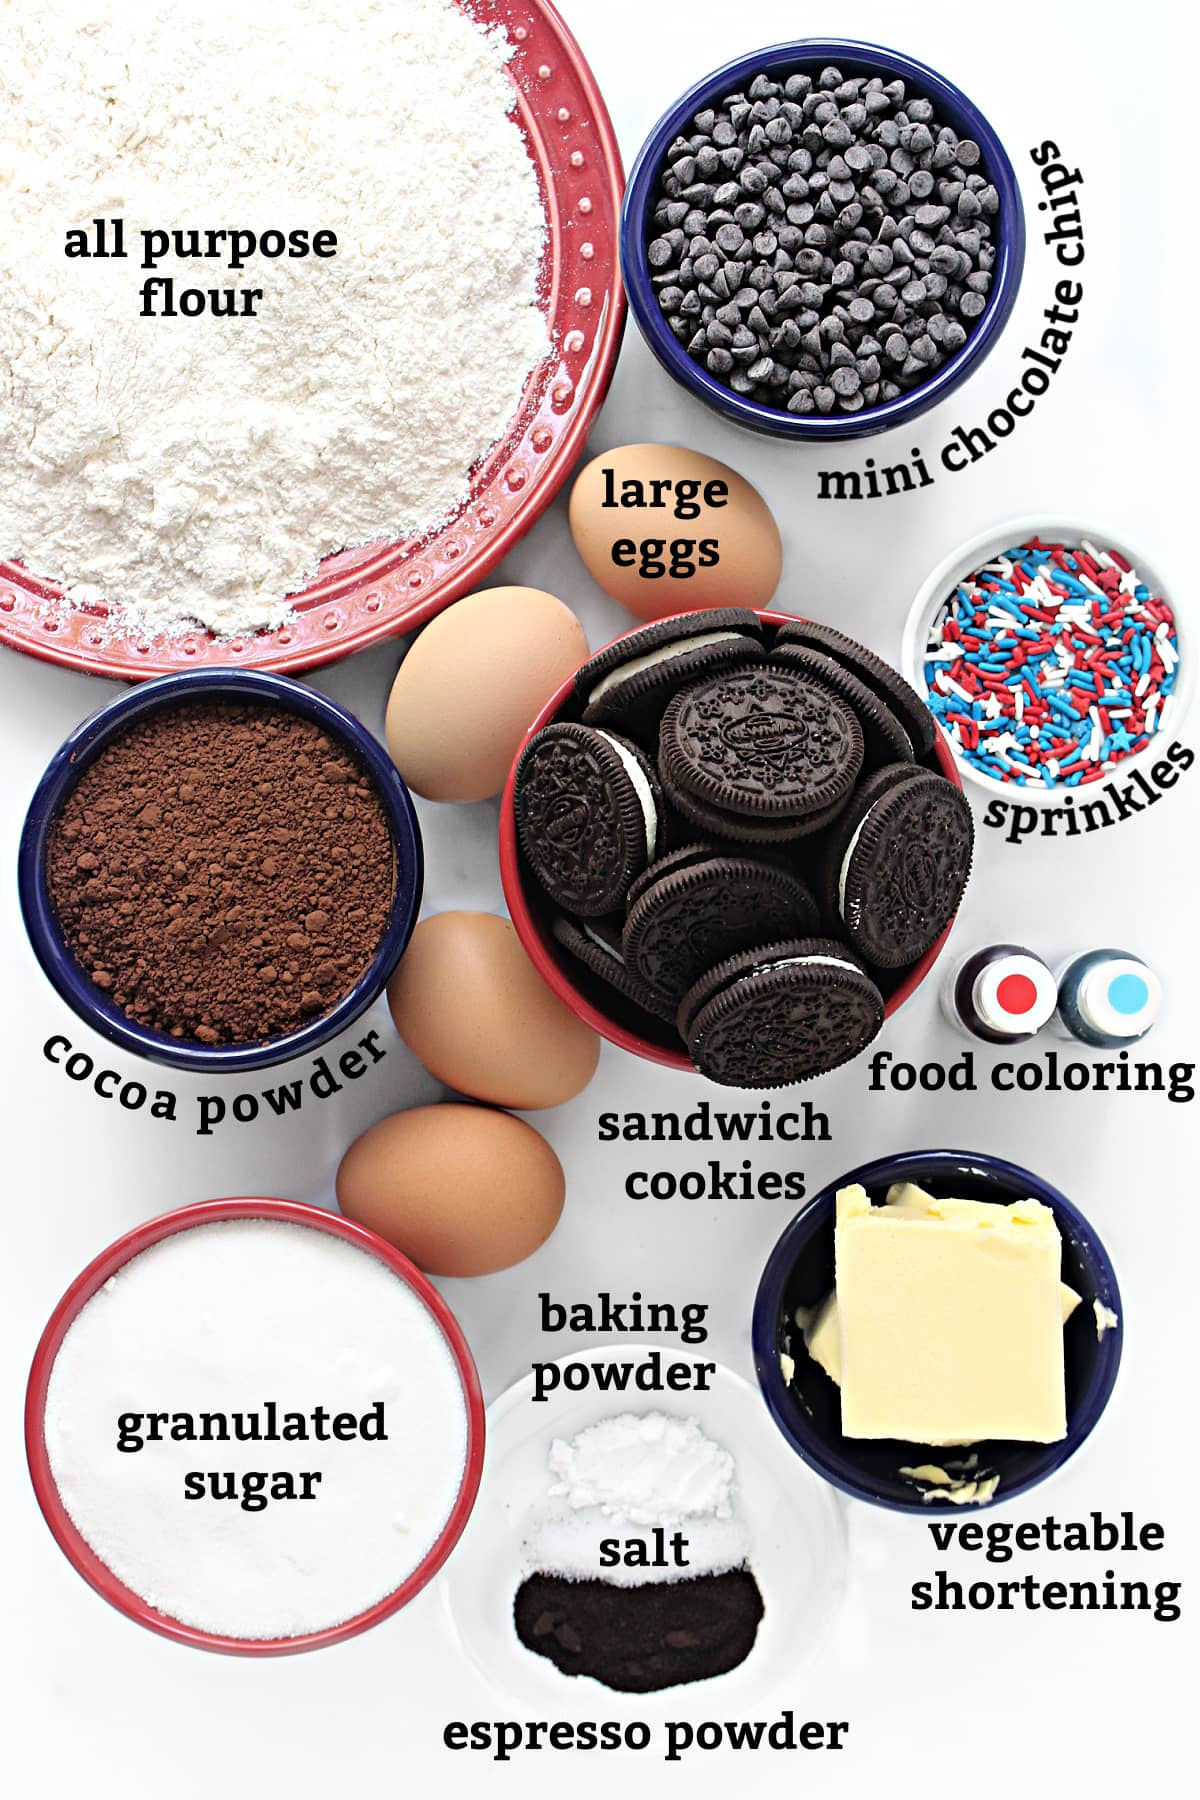 Ingredients: flour, eggs, shortening, sugar, cocoa, cookies, chocolate chips, salt, baking powder, espresso powder, sprinkles, coloring.